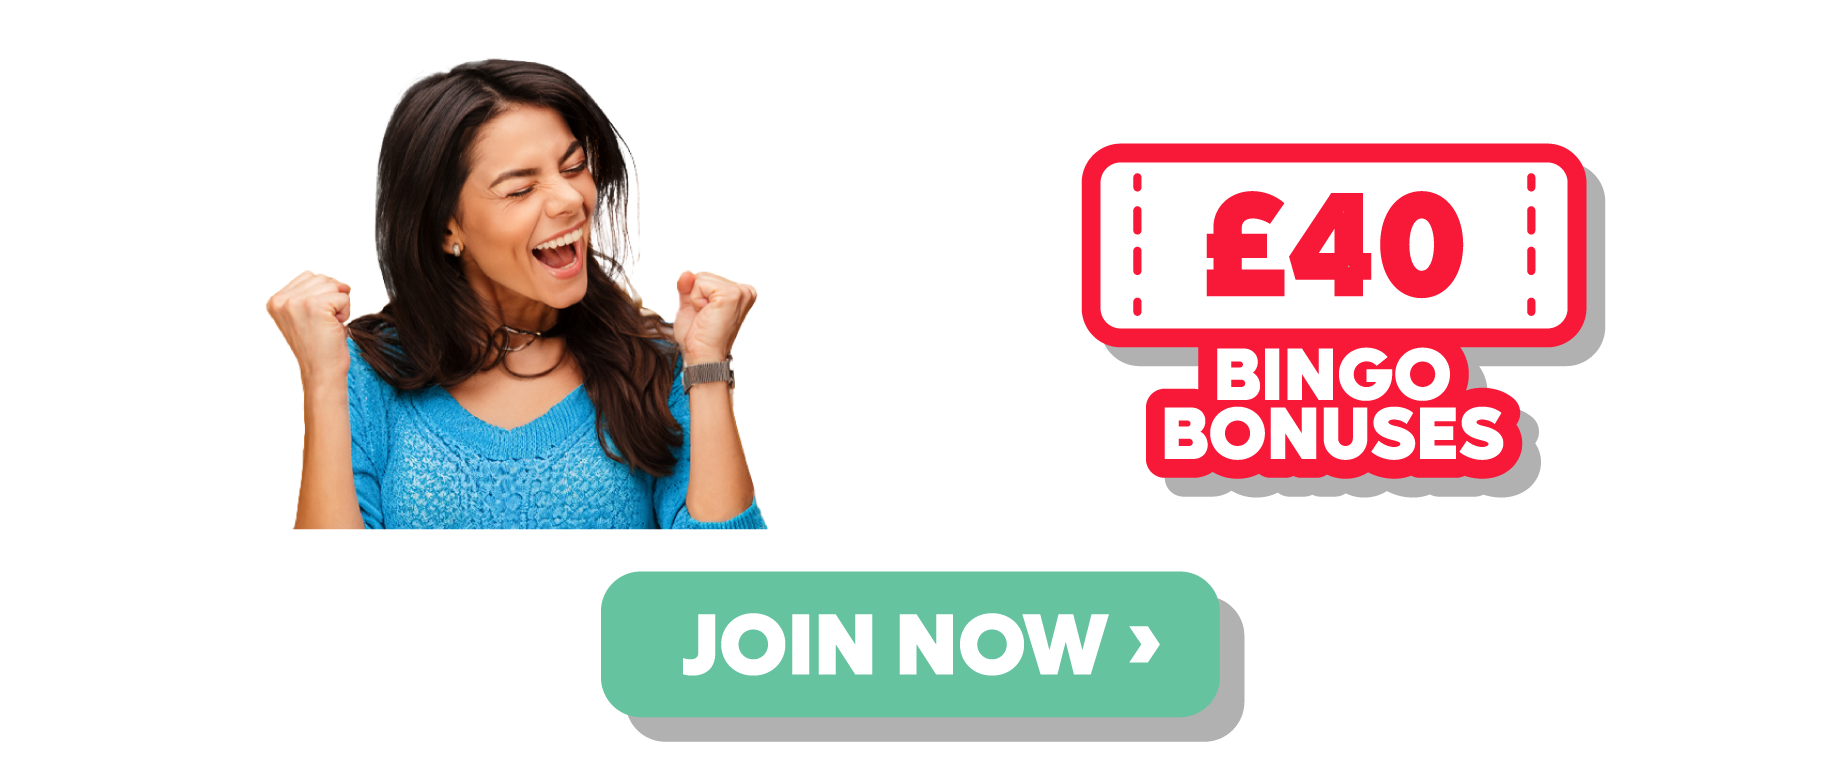 £40 Bingo Bonuses • Join now ›